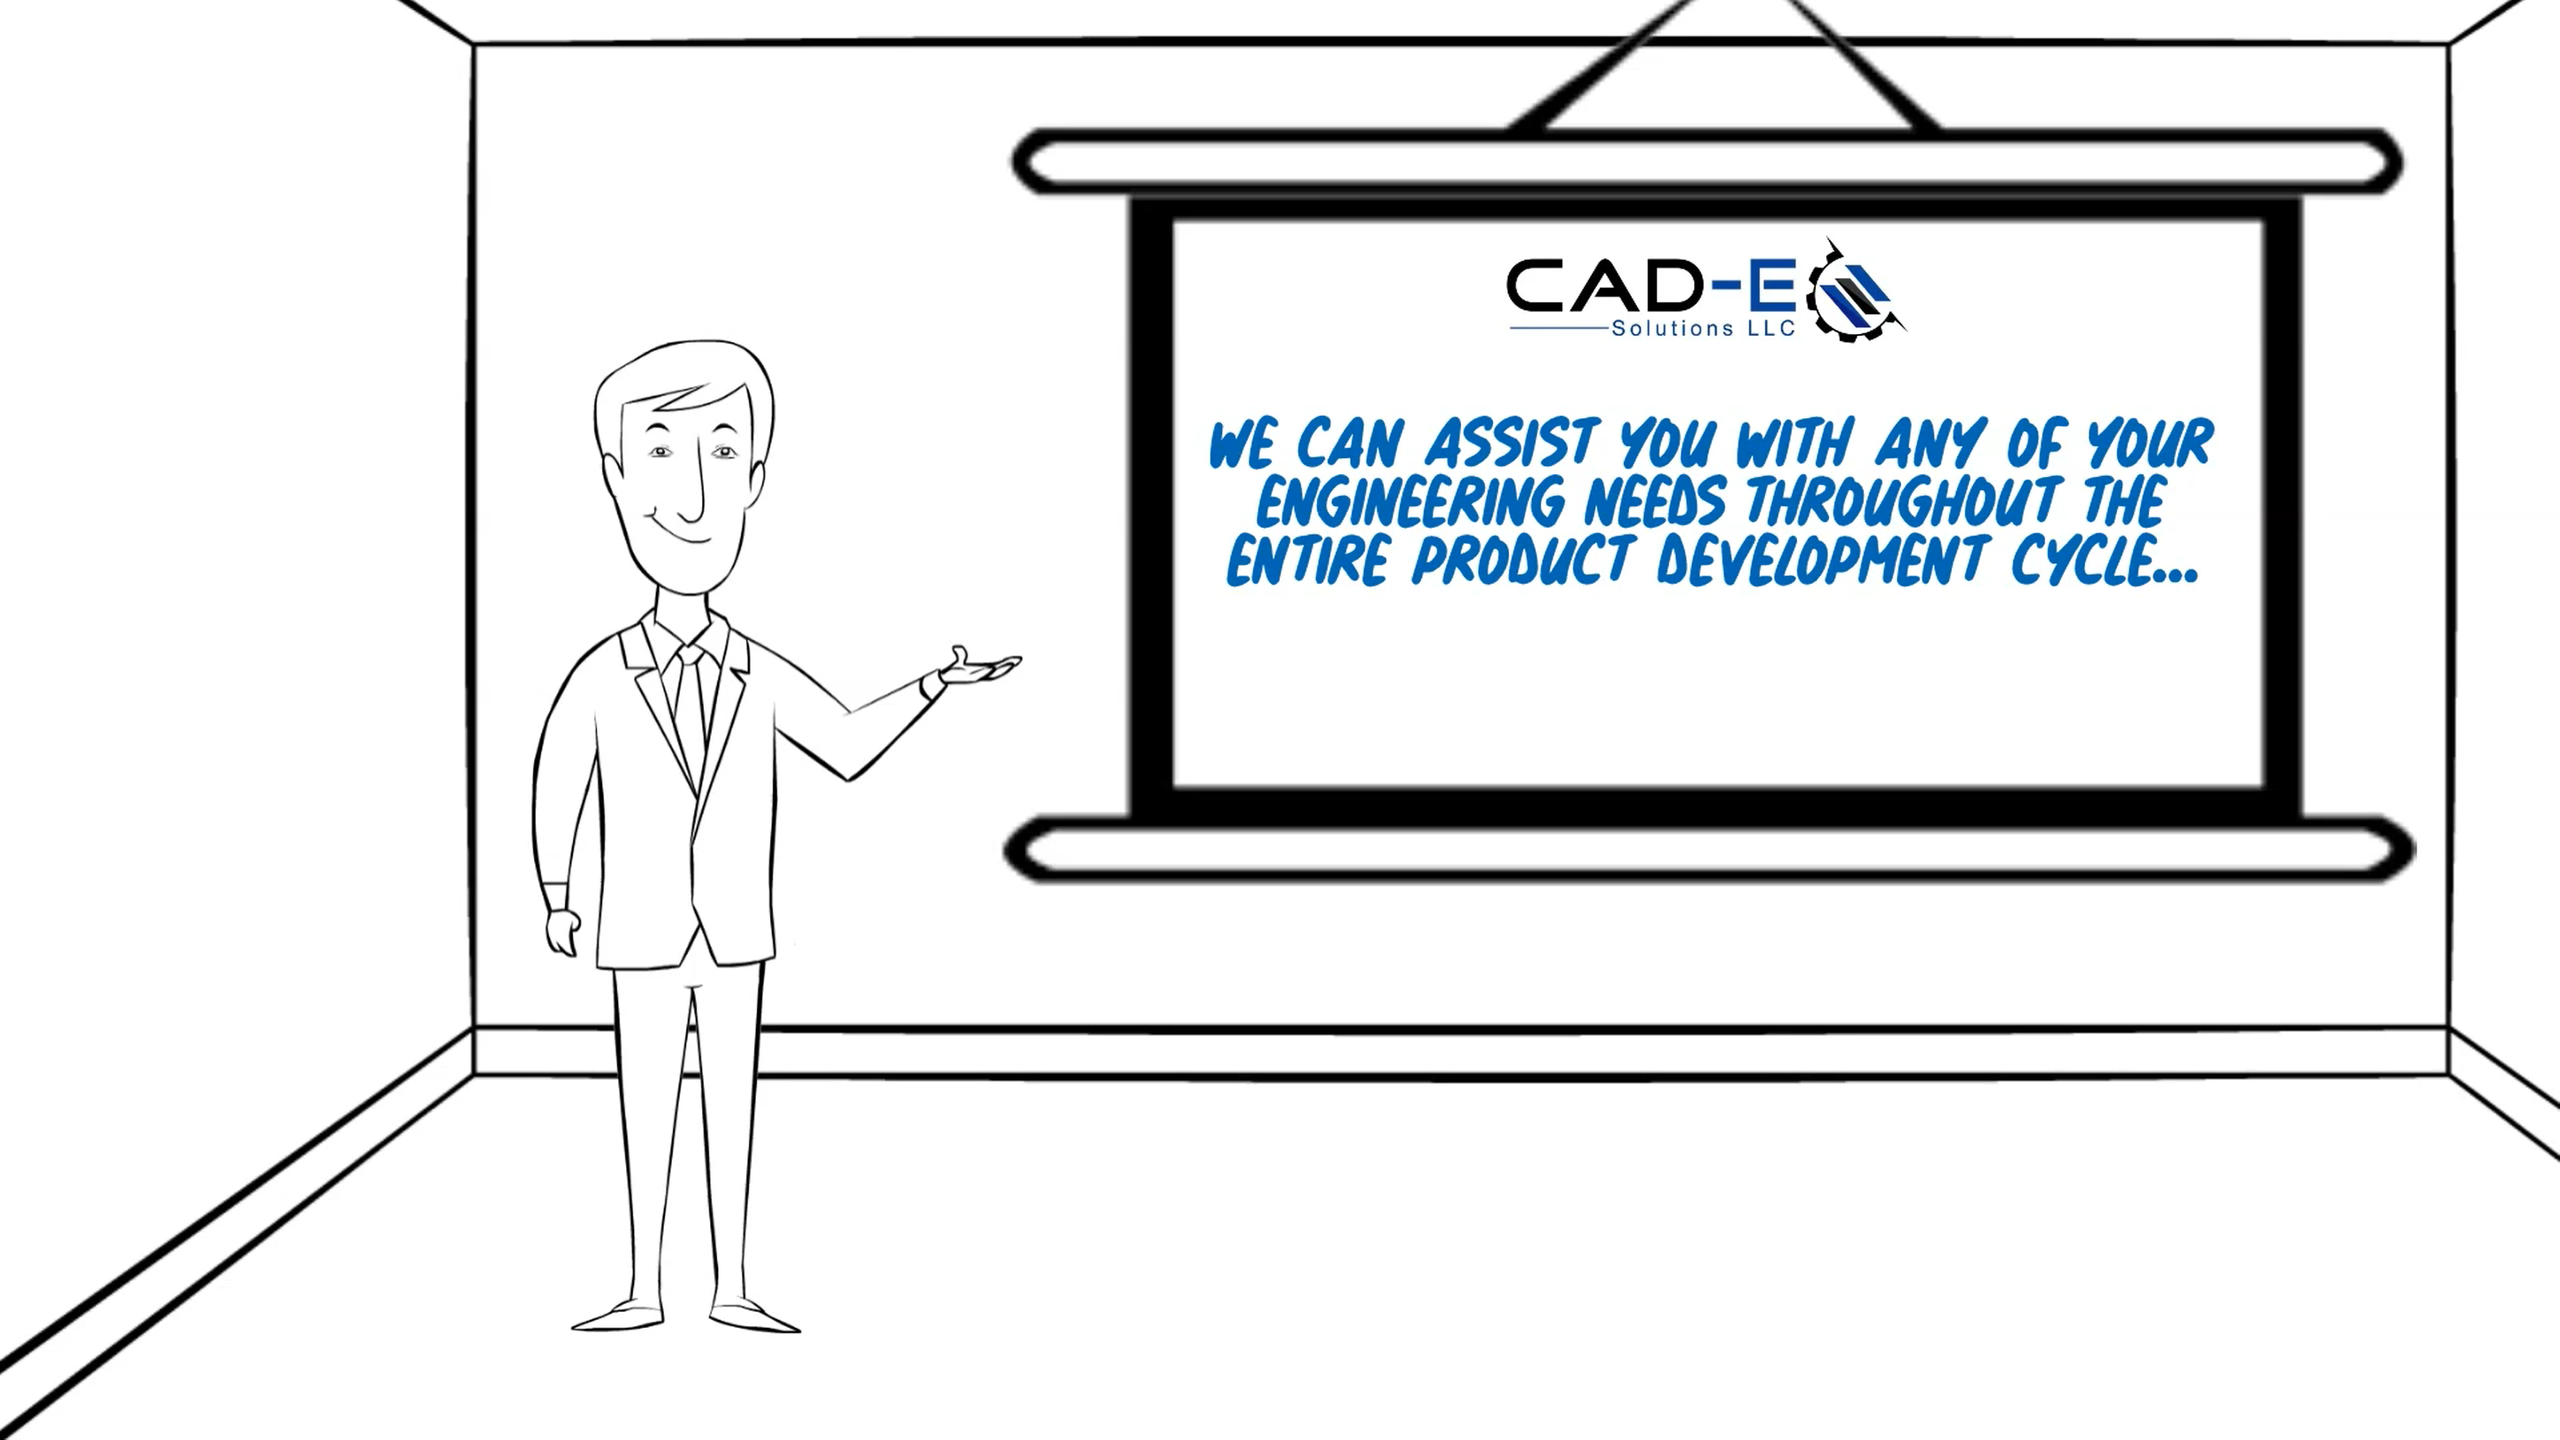 CAD-E Solutions LLC - Providing Engineered Solutions